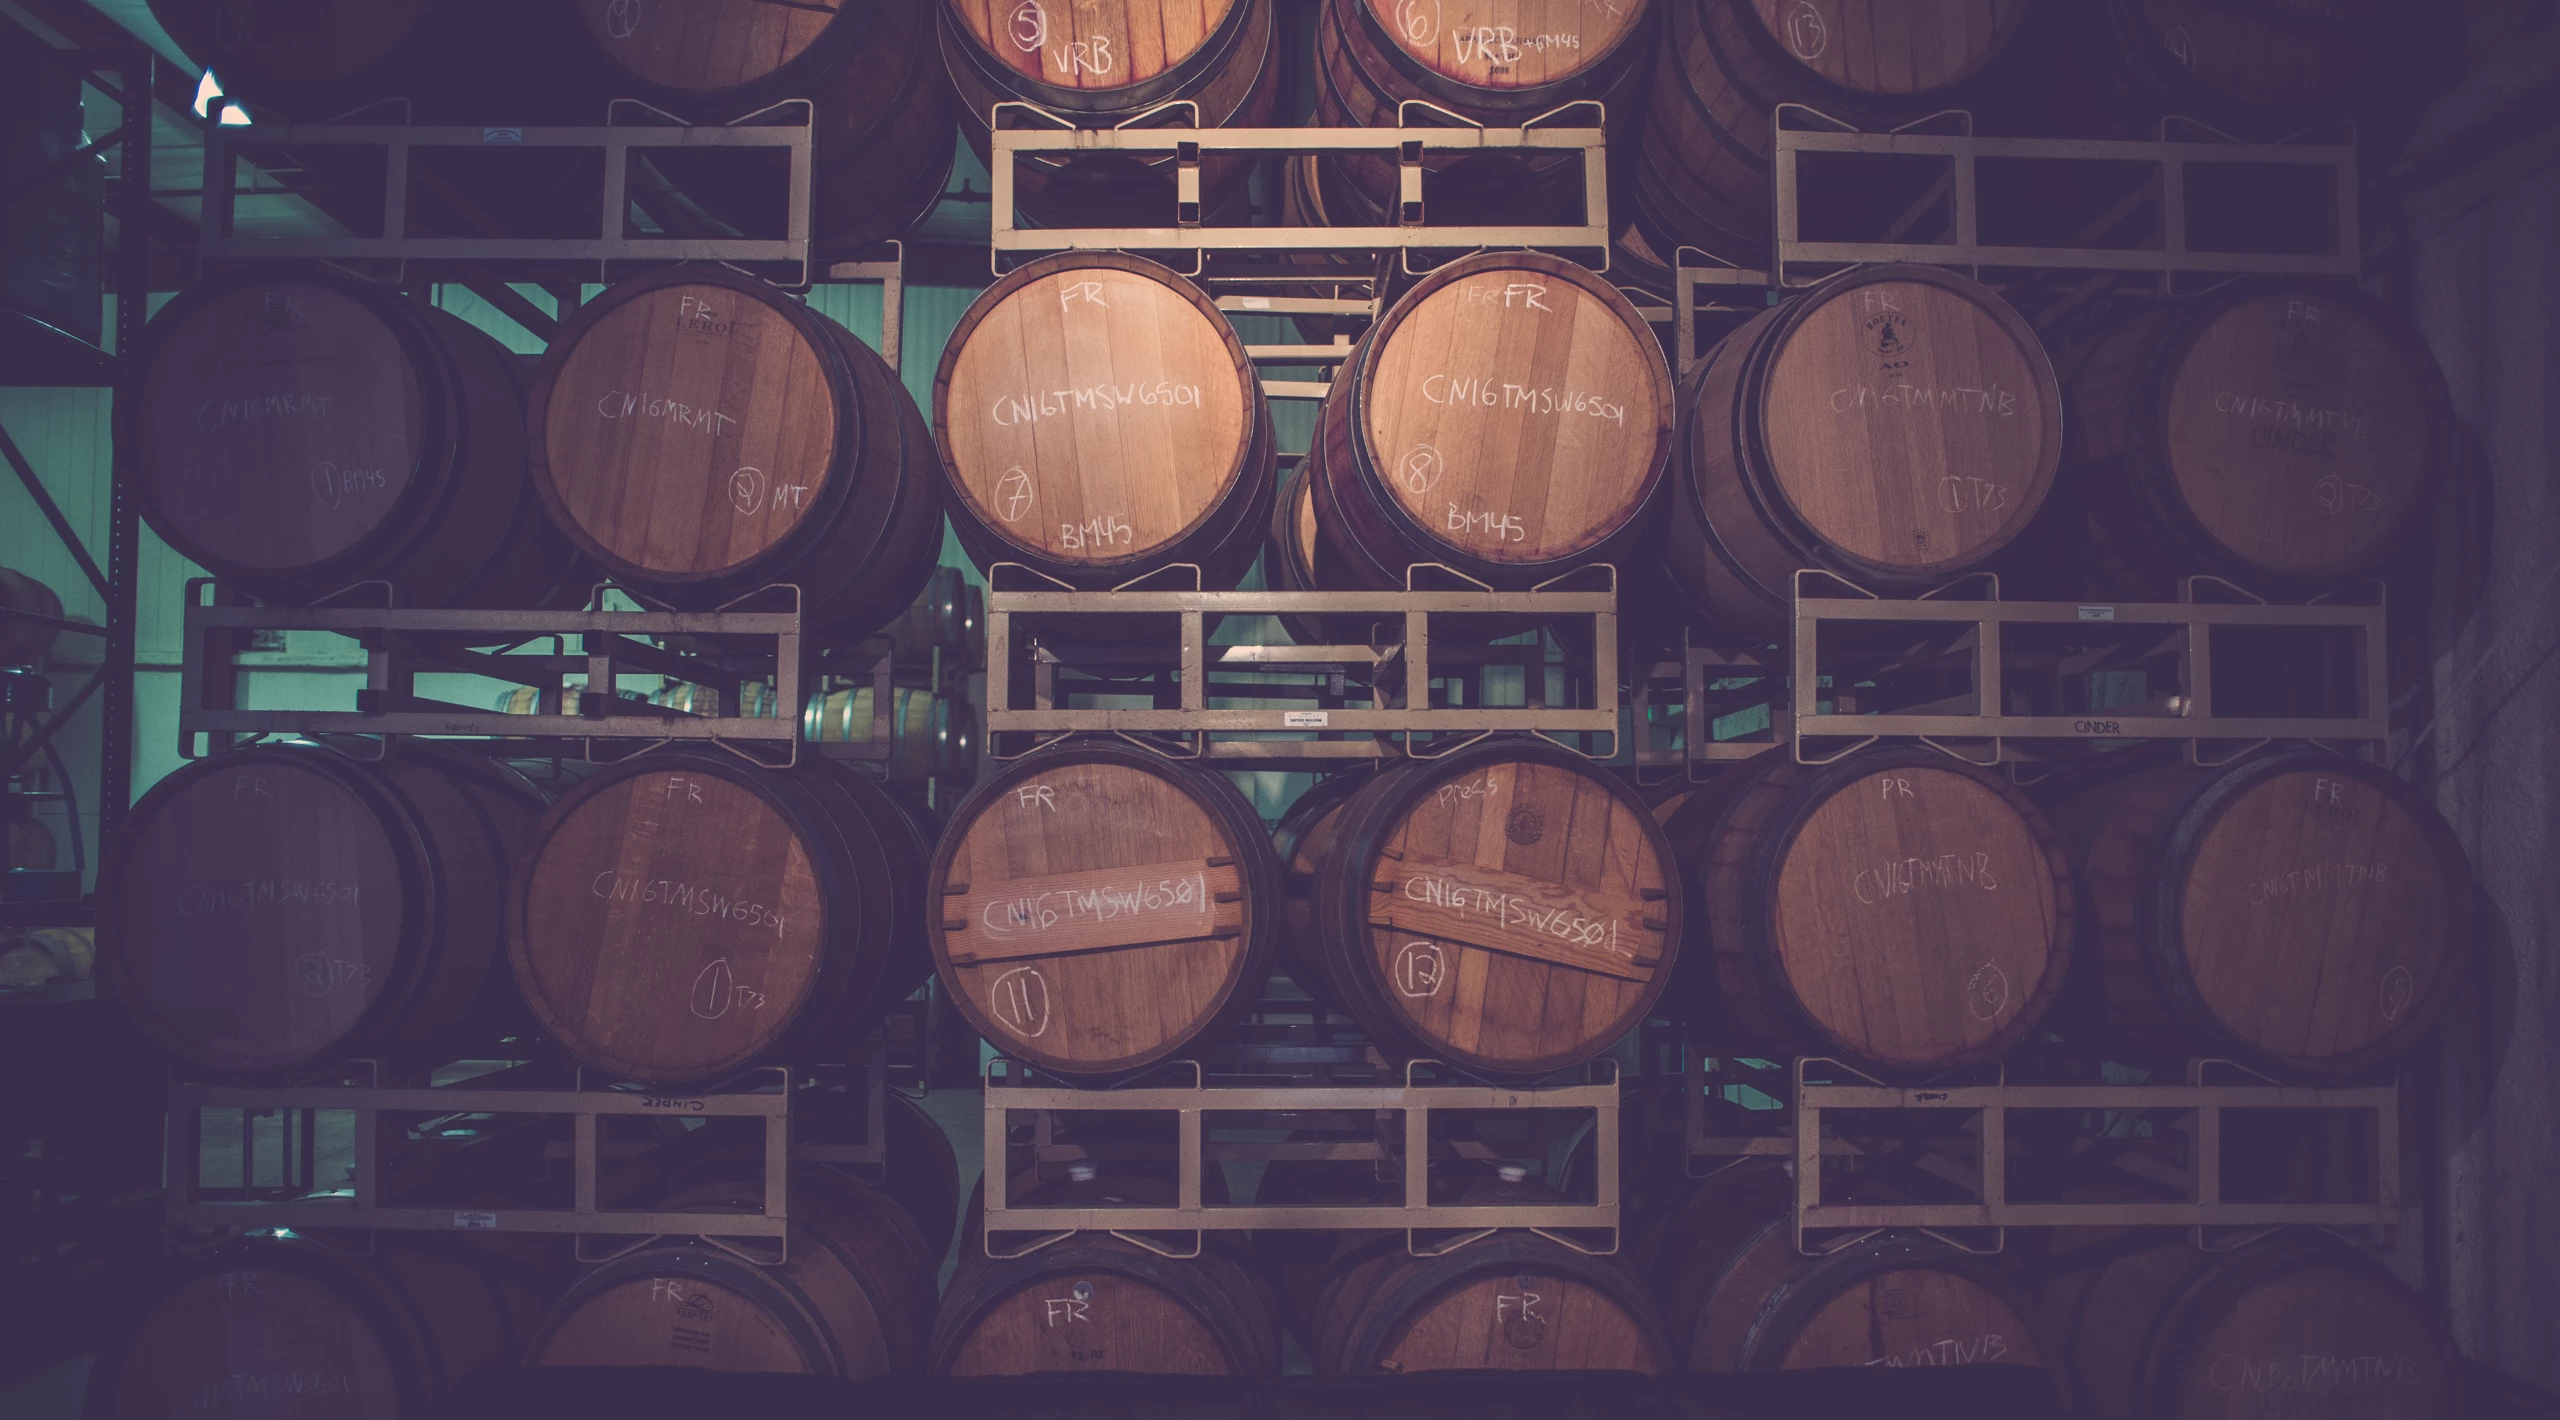 Rows of wine barrels in a wine cellar